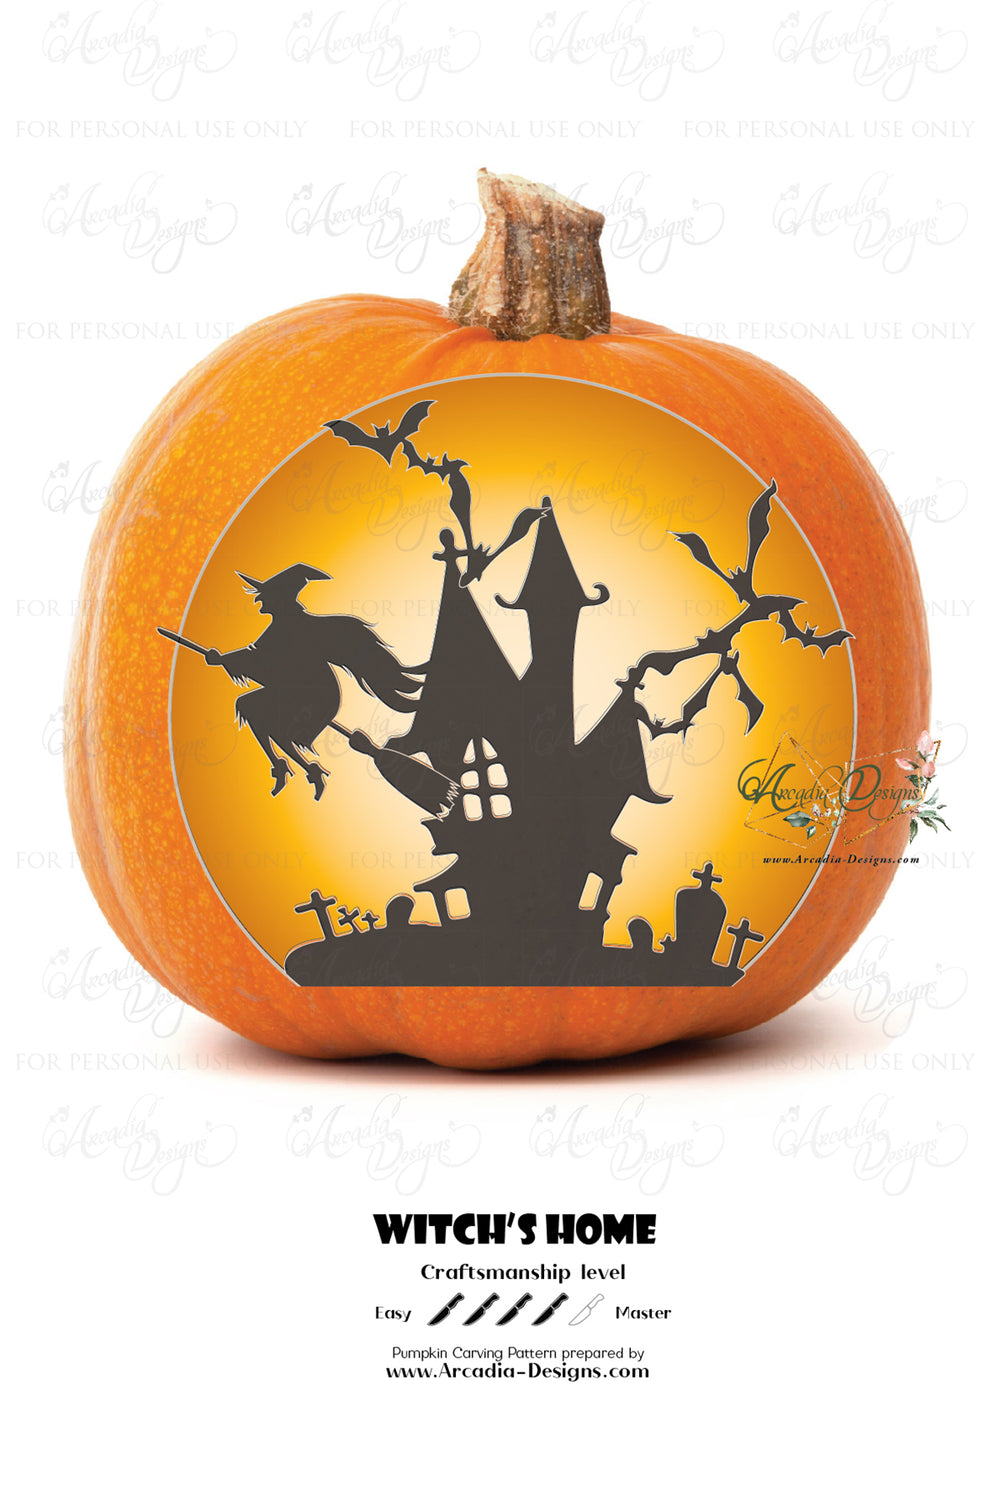 witch pumpkin carving stencils